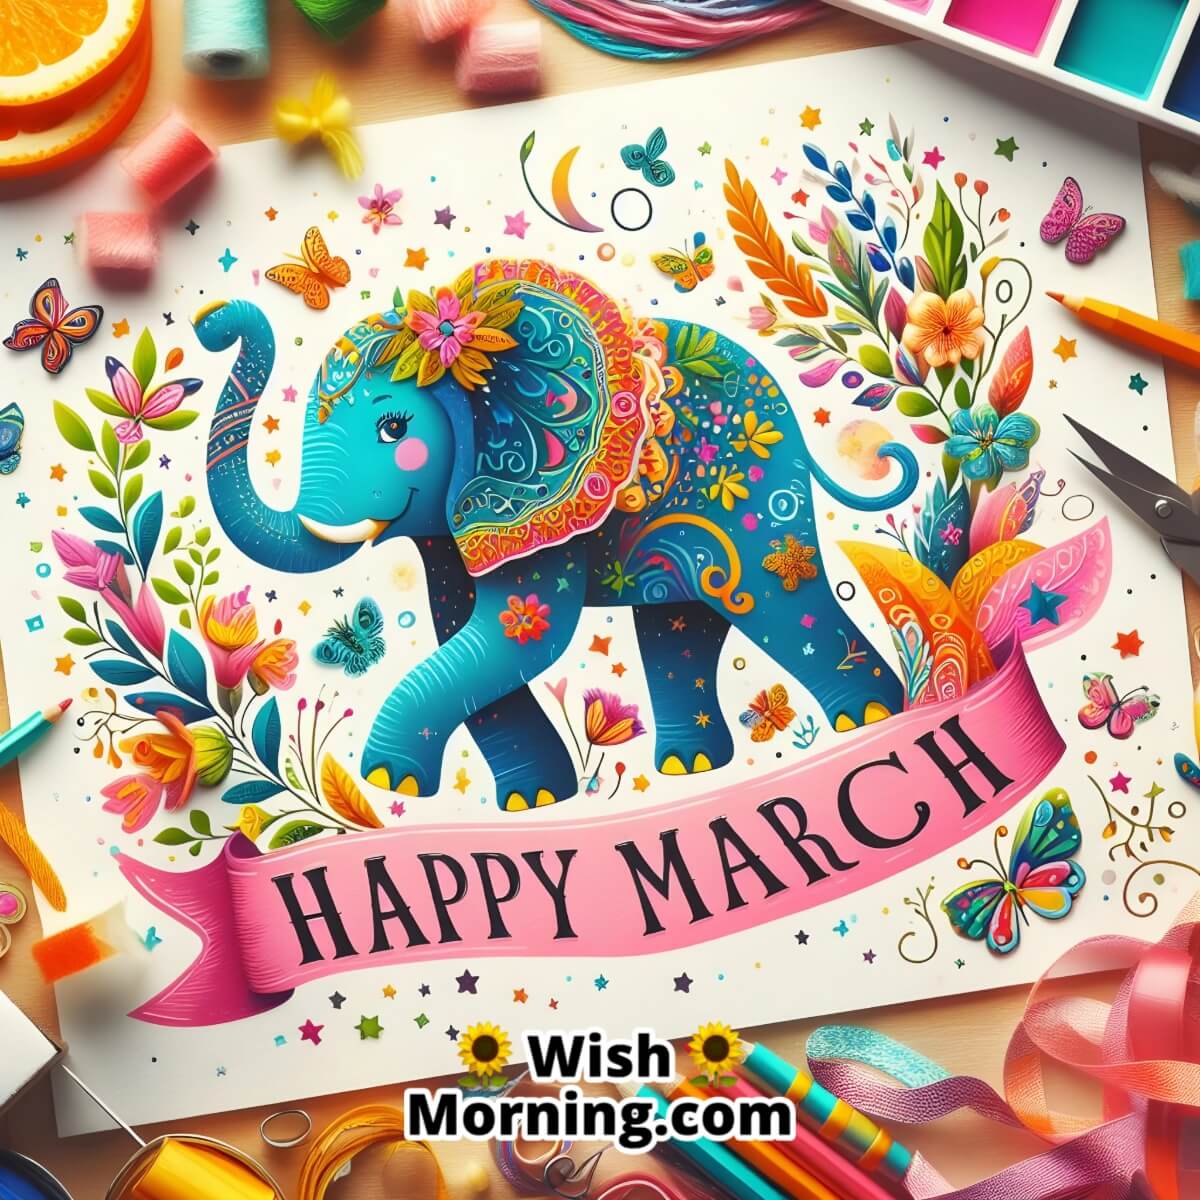 Happy March Image